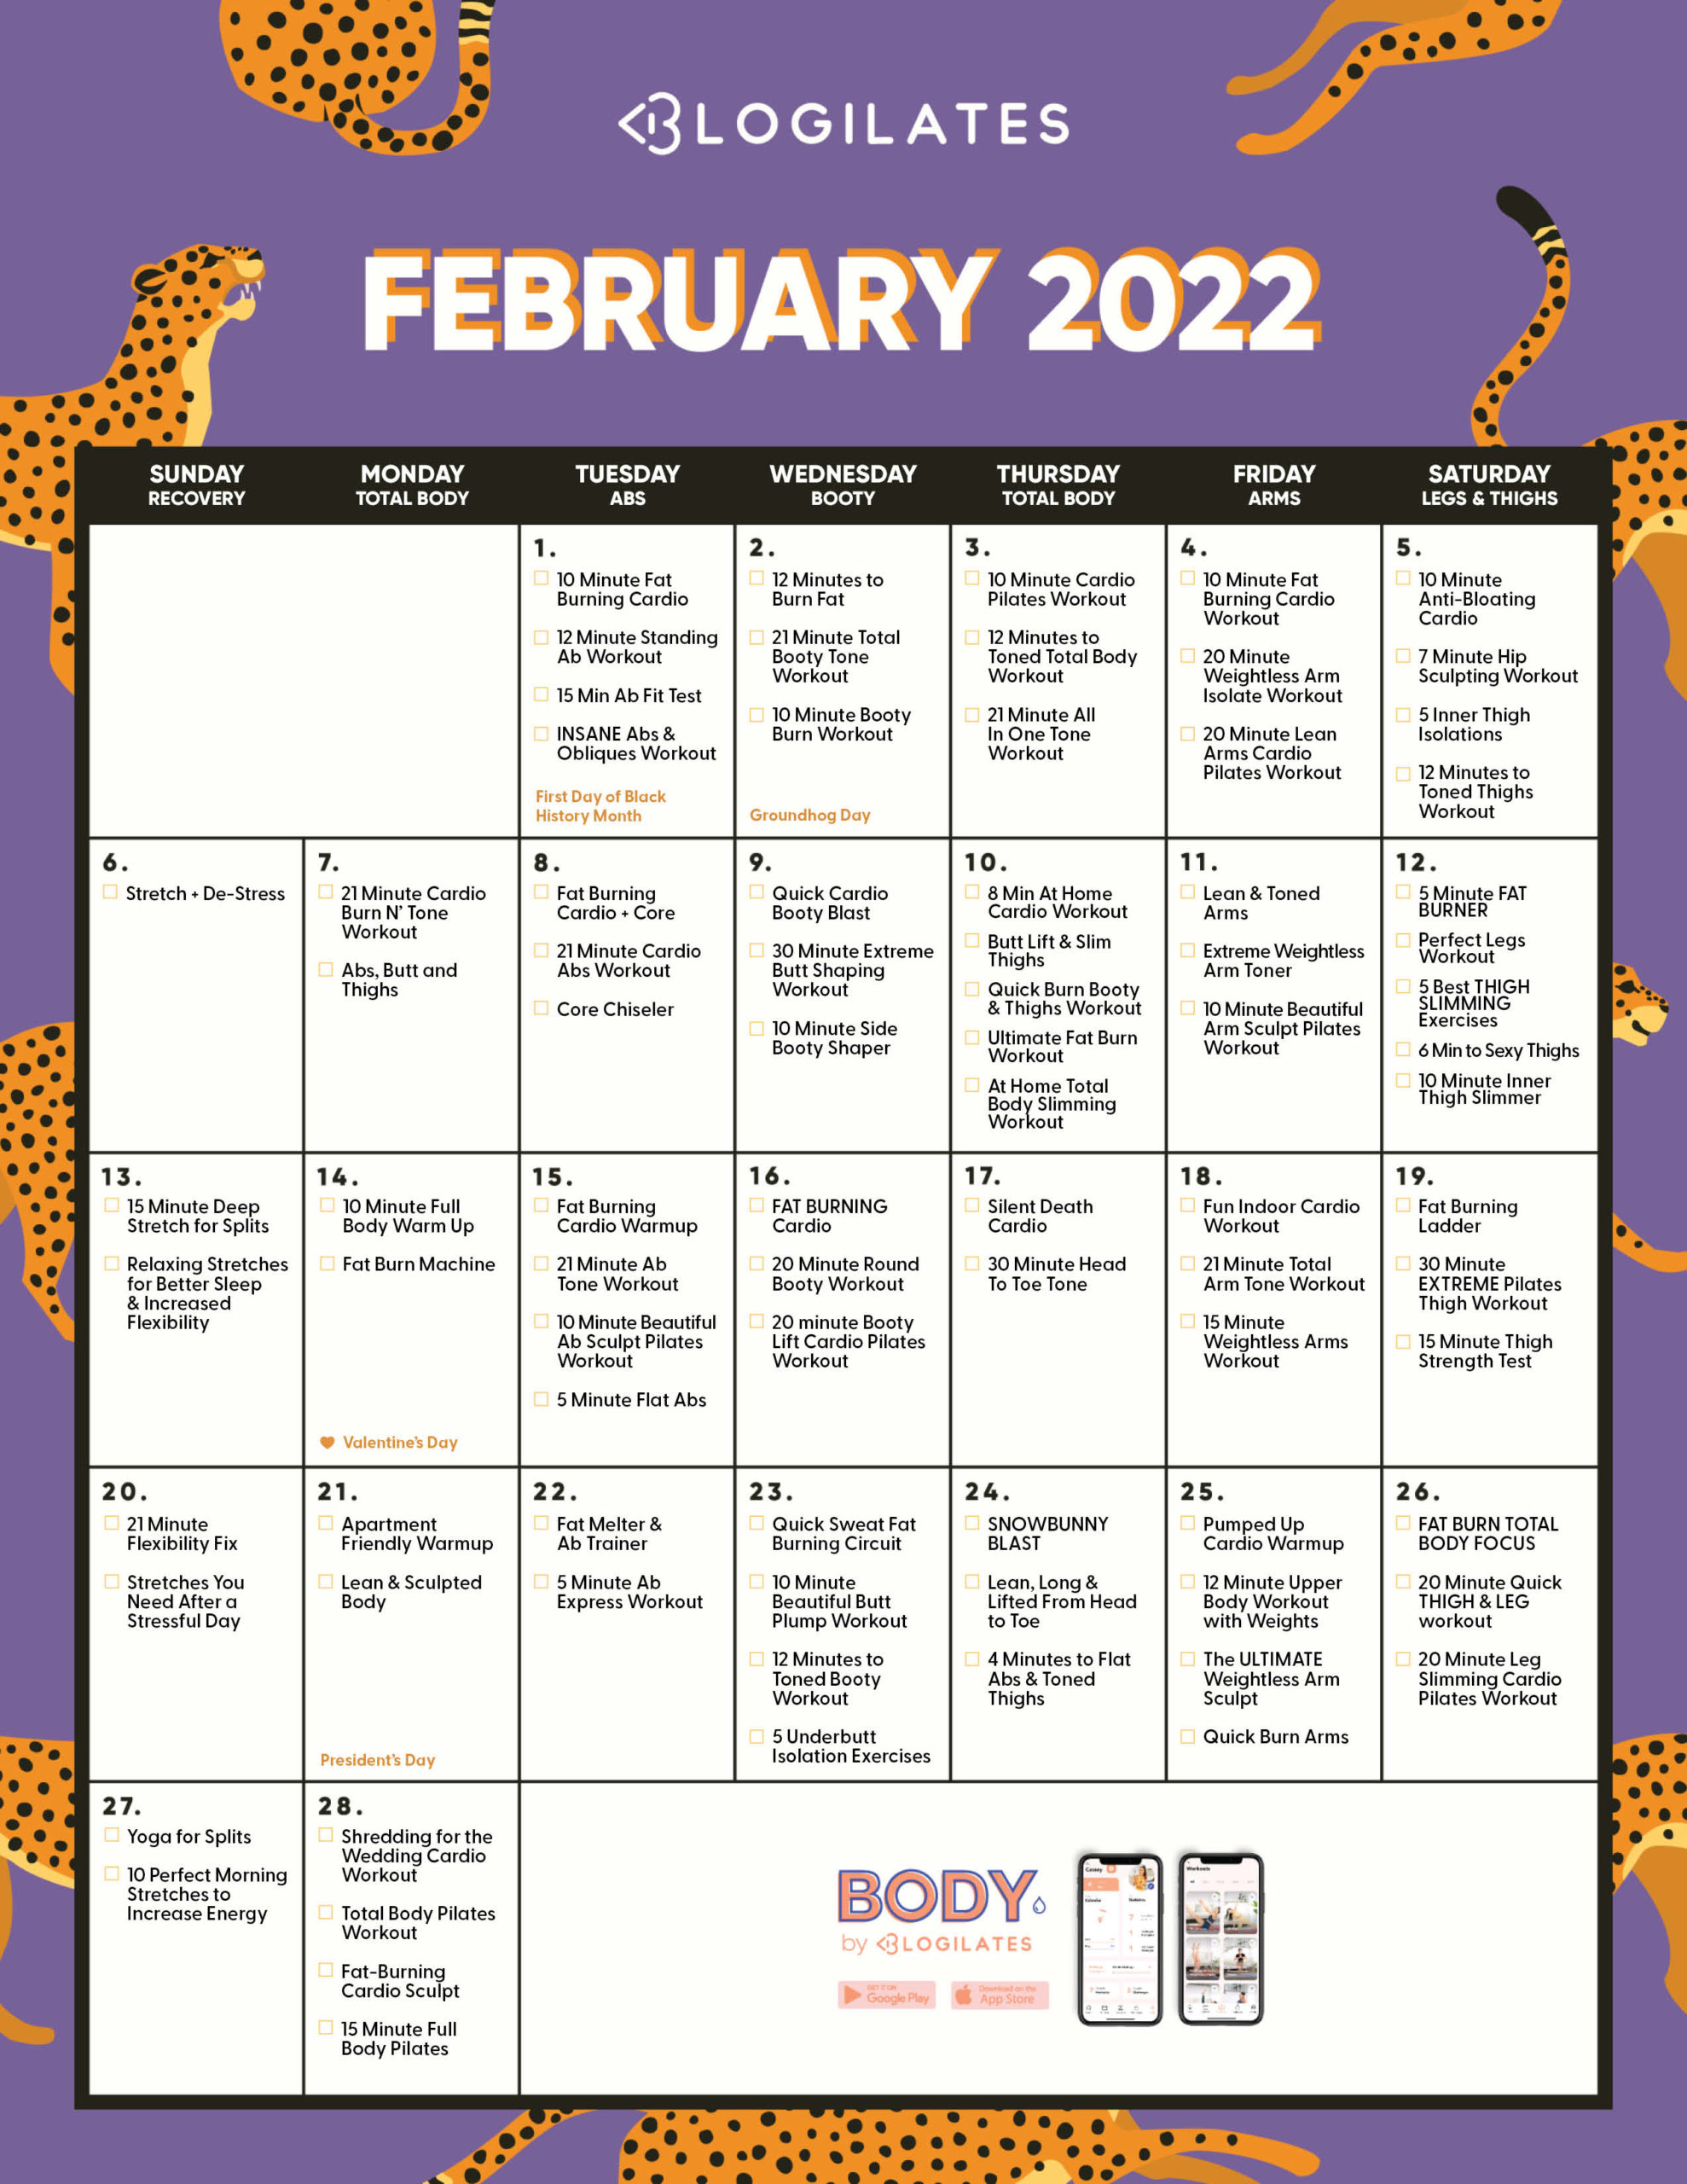 February Calendar 2022 The Blogilates February 2022 Workout Calendar! - Blogilates